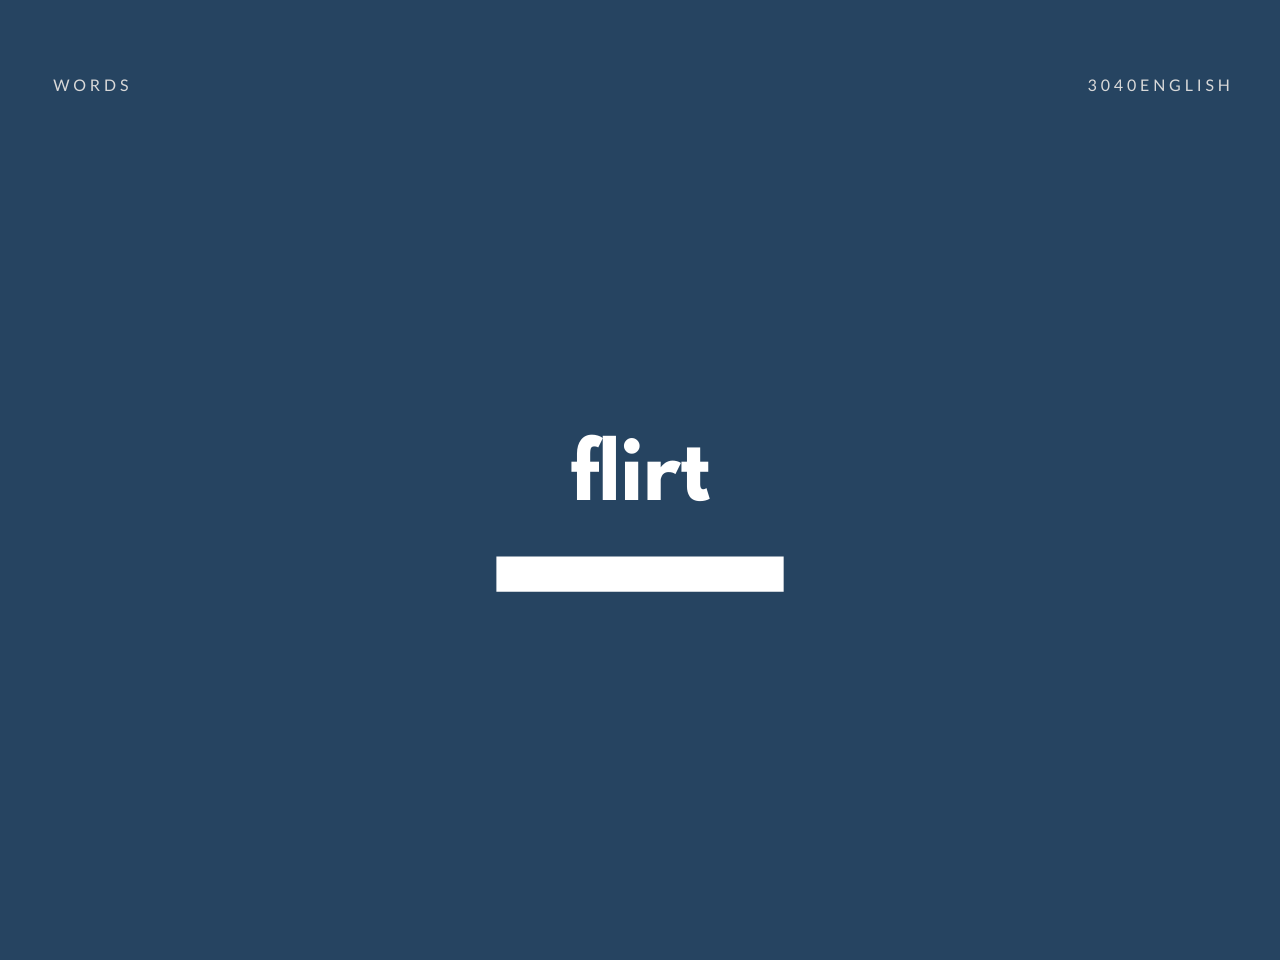 Flirt の意味と簡単な使い方 音読用例文あり